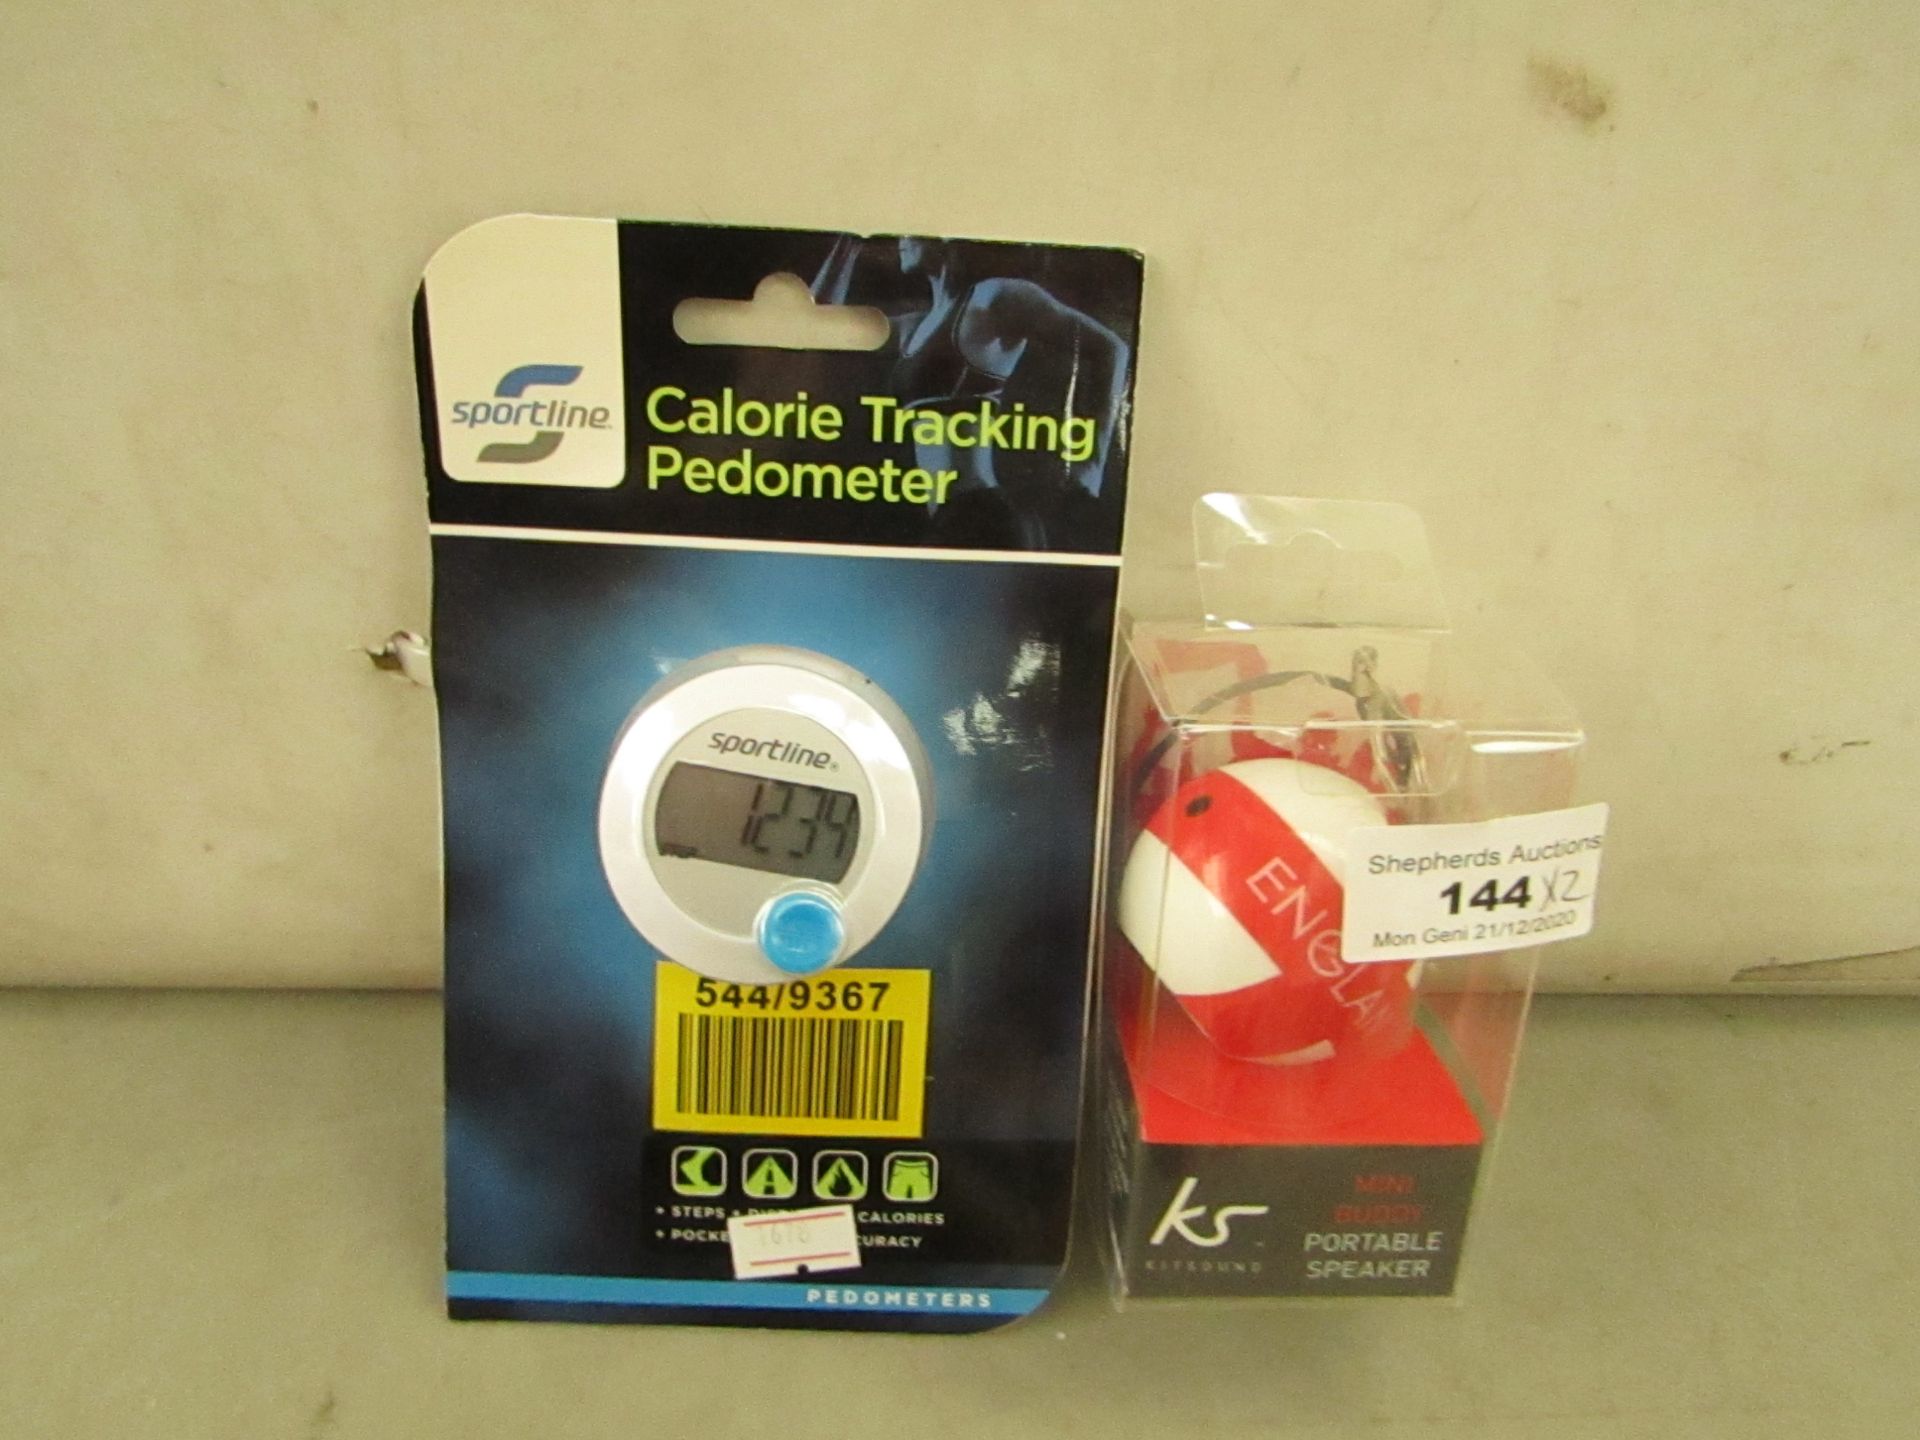 1x Sportline - Calorie Tracking Pedometer - Unused & Packaged. 1x Mini Portable Speaker - Unsued &